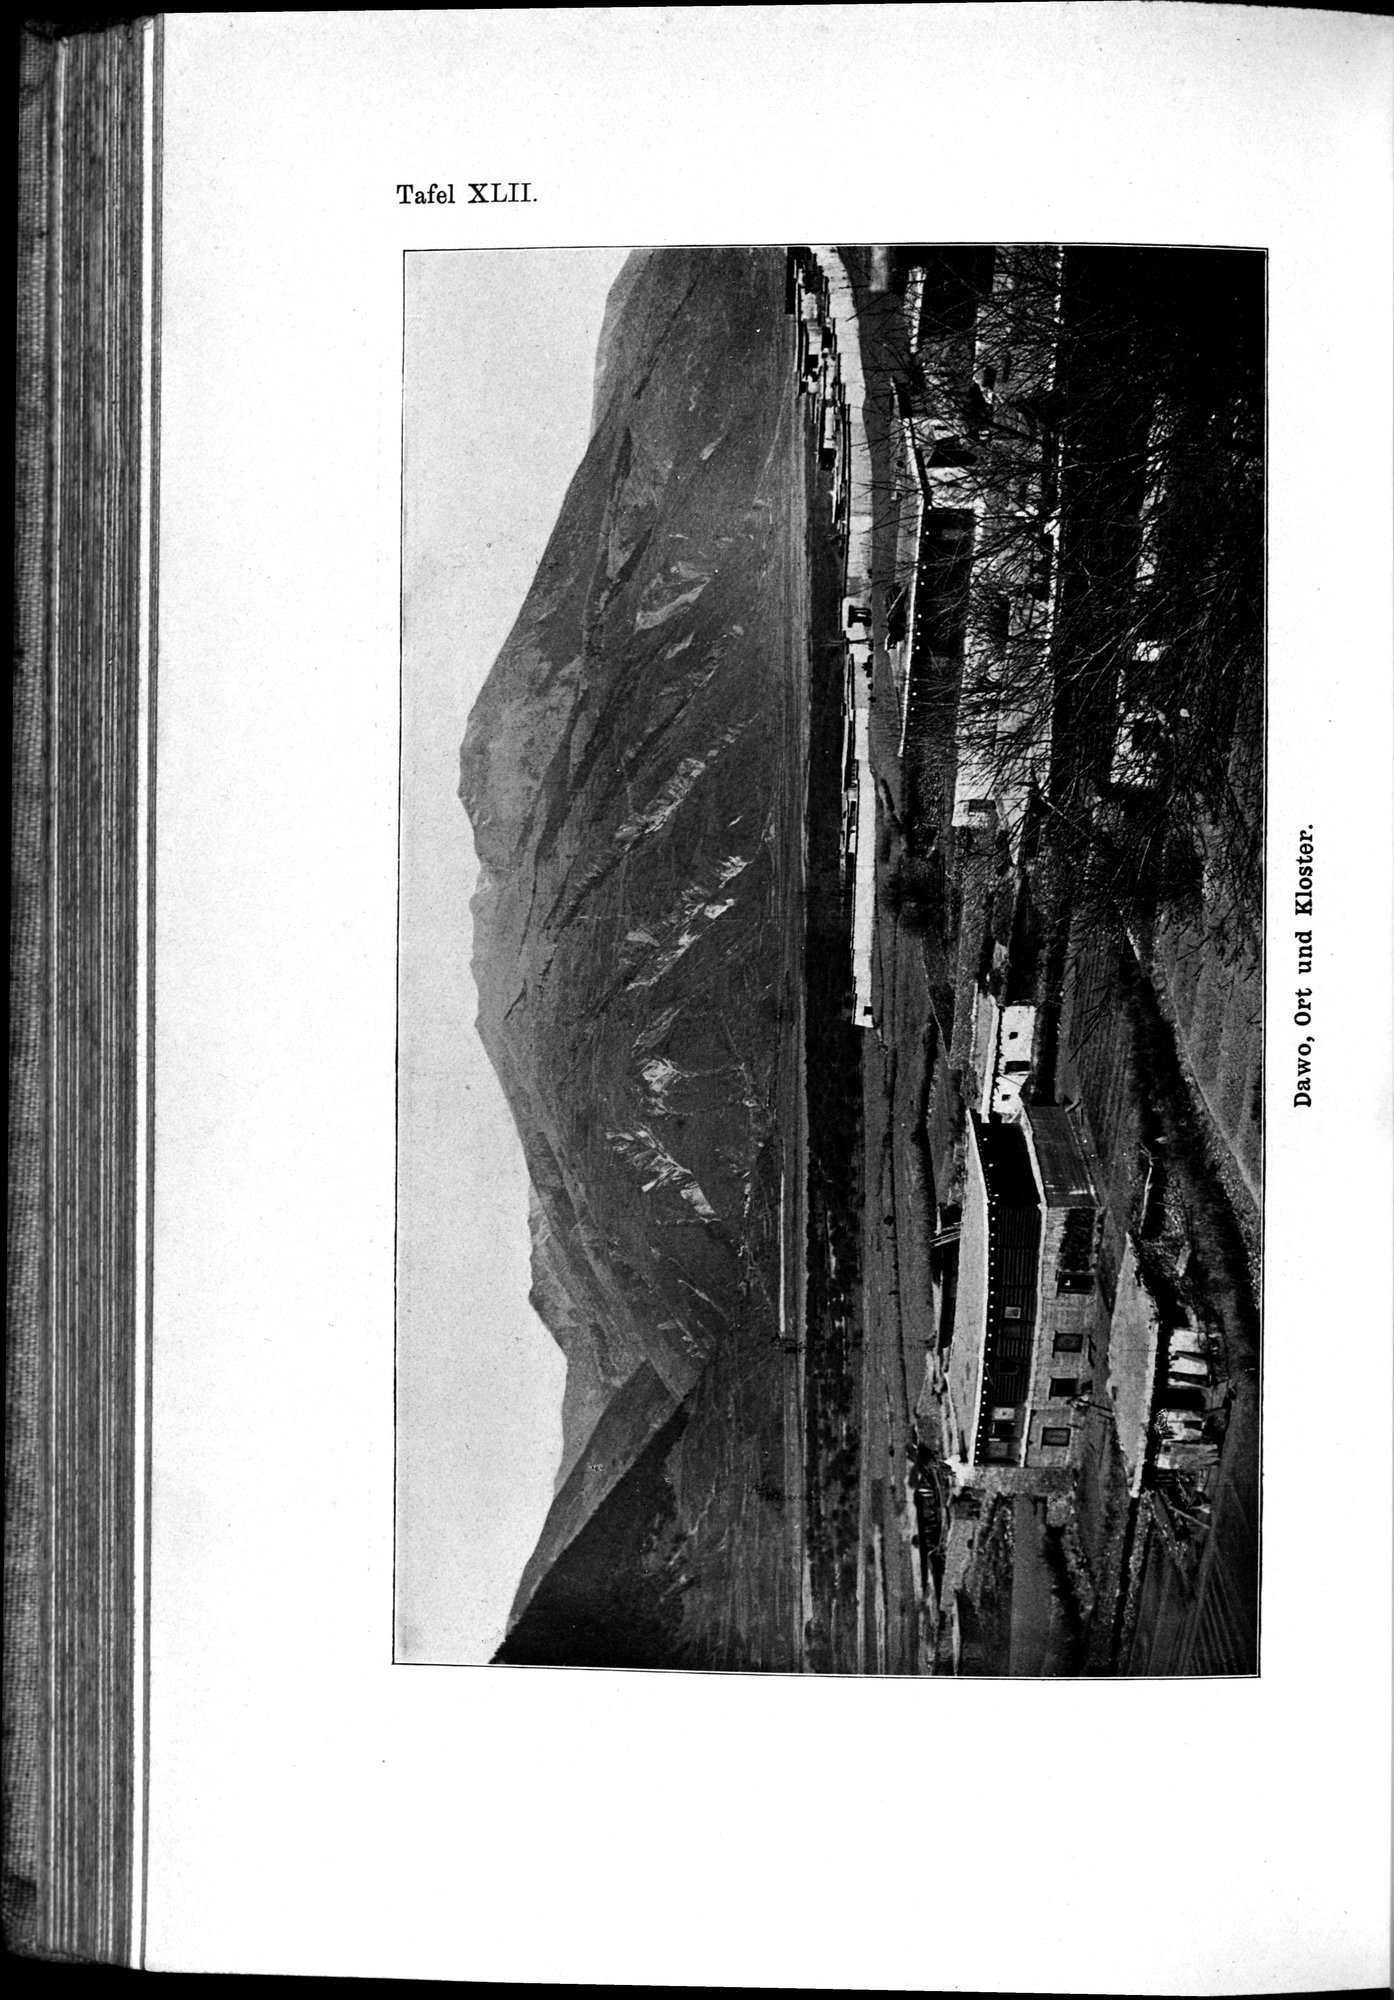 Meine Tibetreise : vol.2 / Page 236 (Grayscale High Resolution Image)